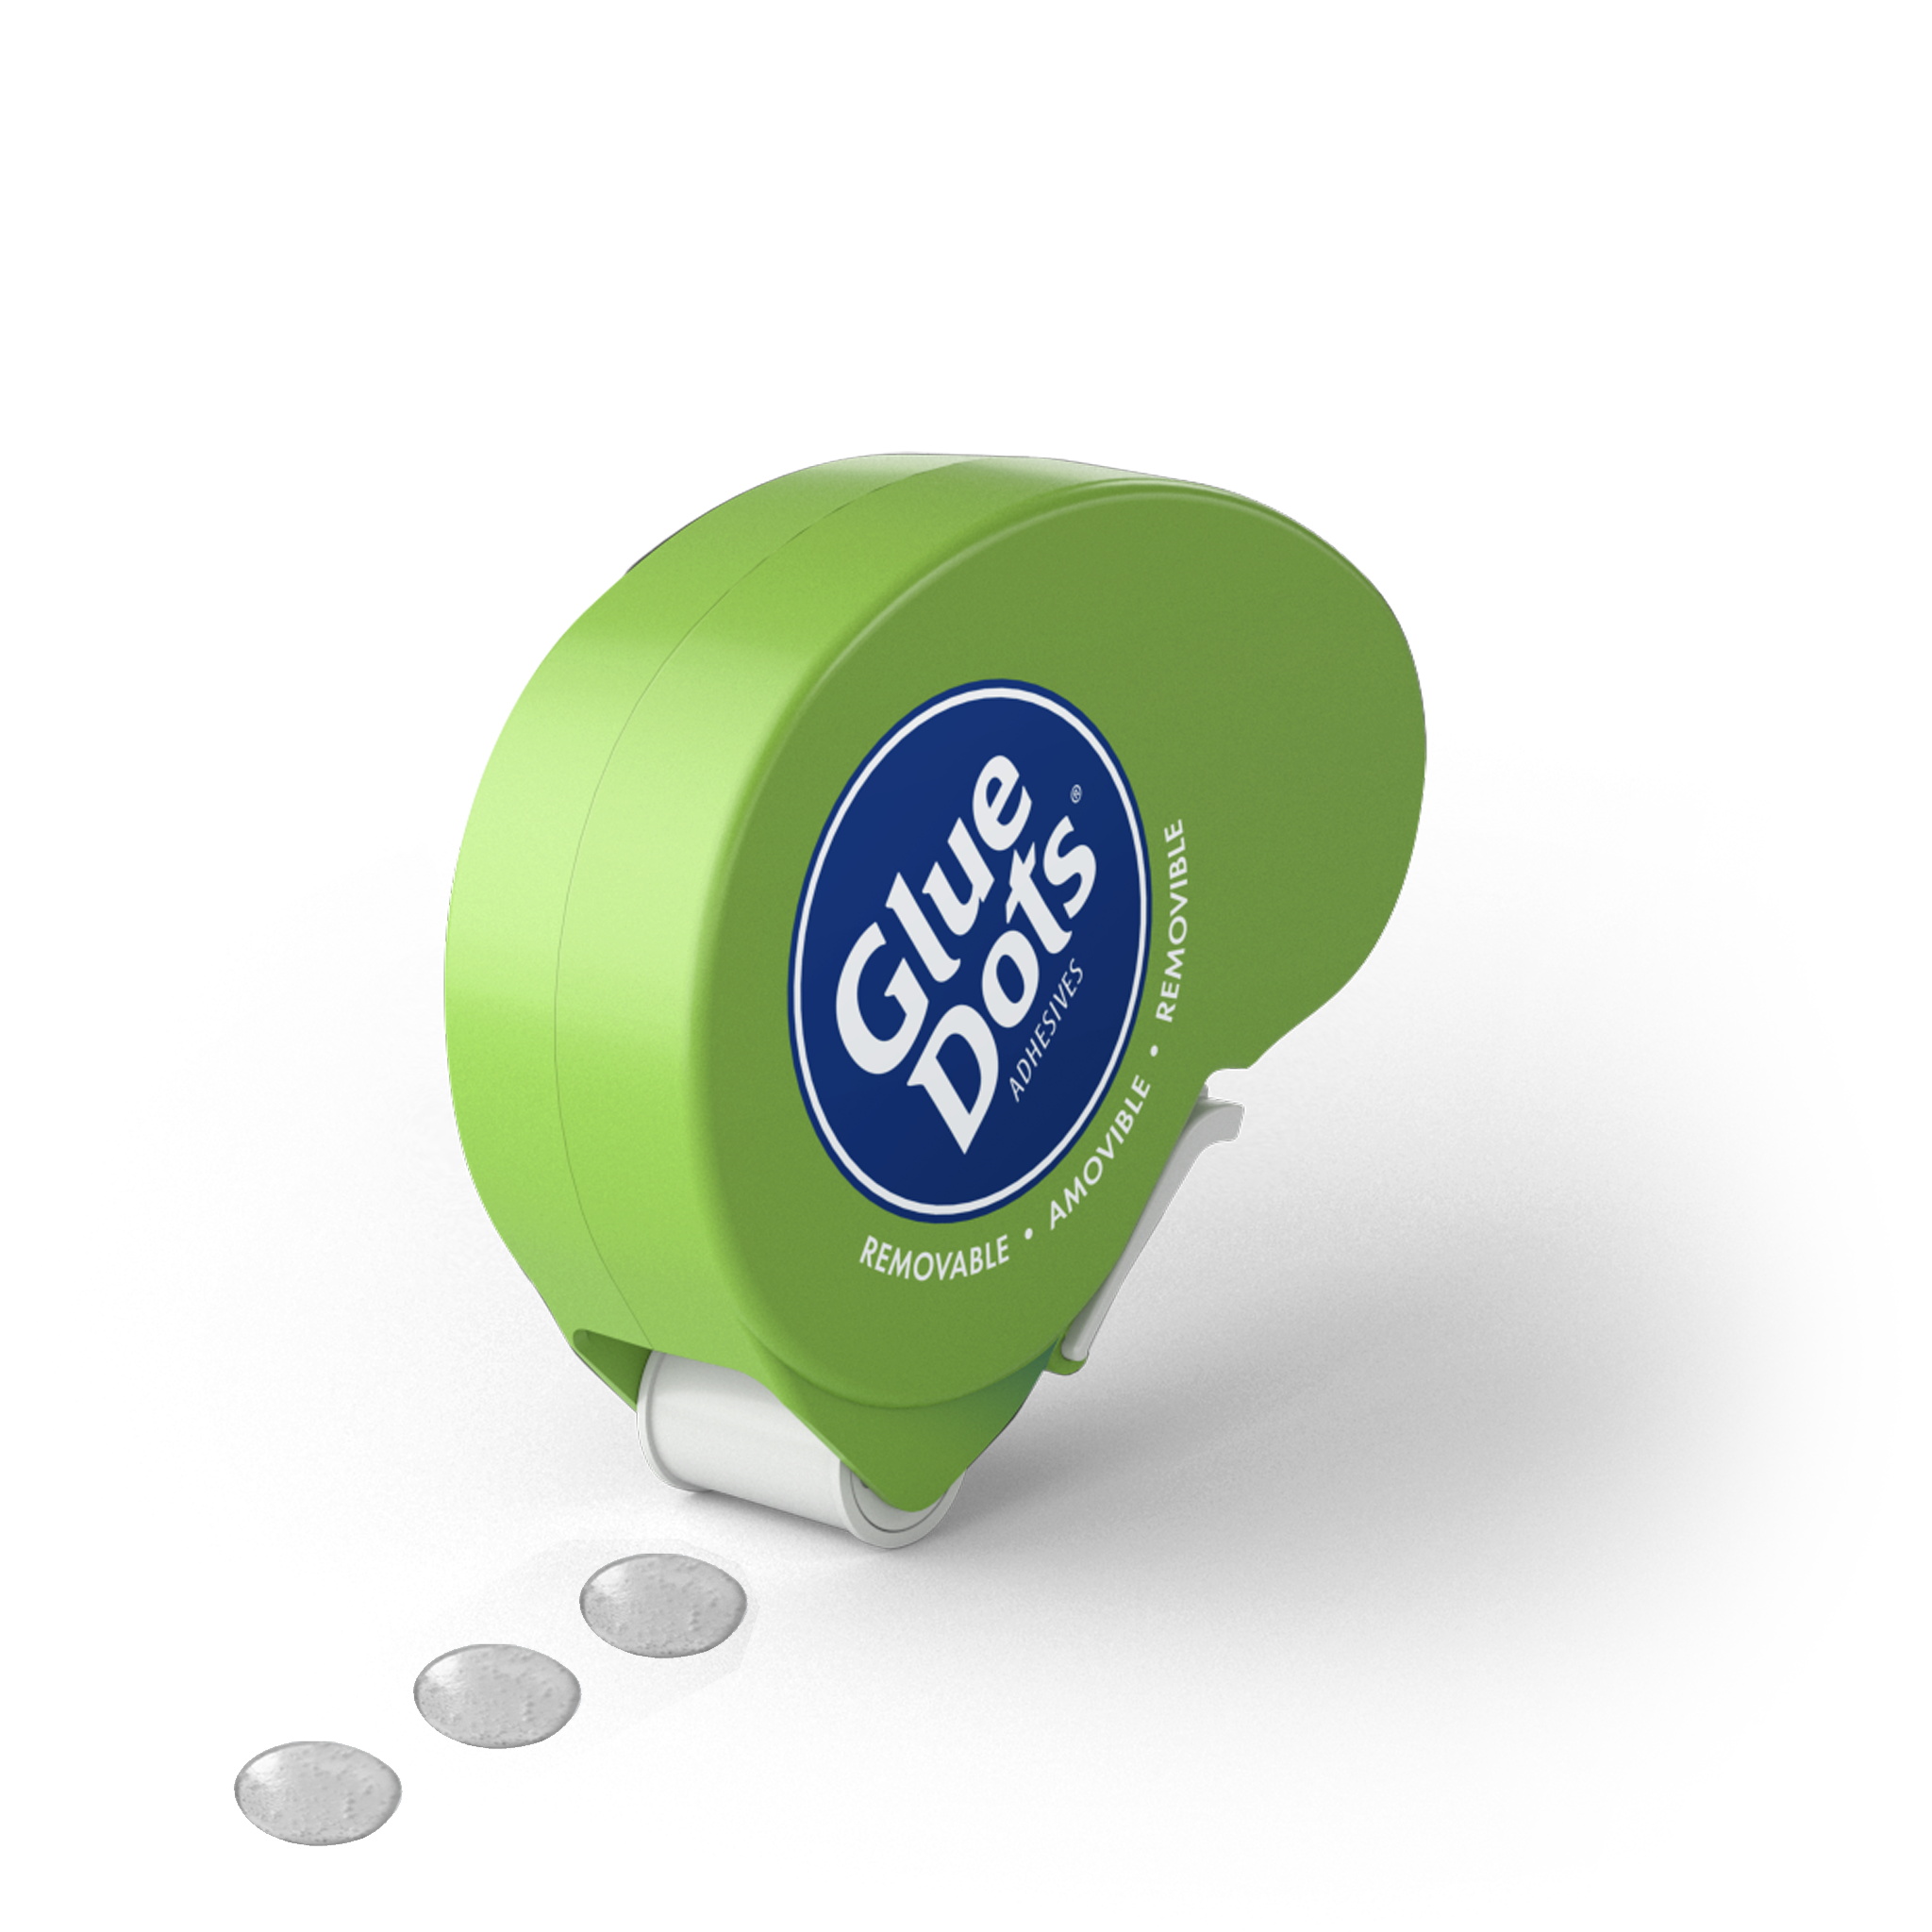 Glue Dots Glue Dots 0.5 in. Non-Toxic Craft Glue Dot Roll - Clear; Pack 200  402536